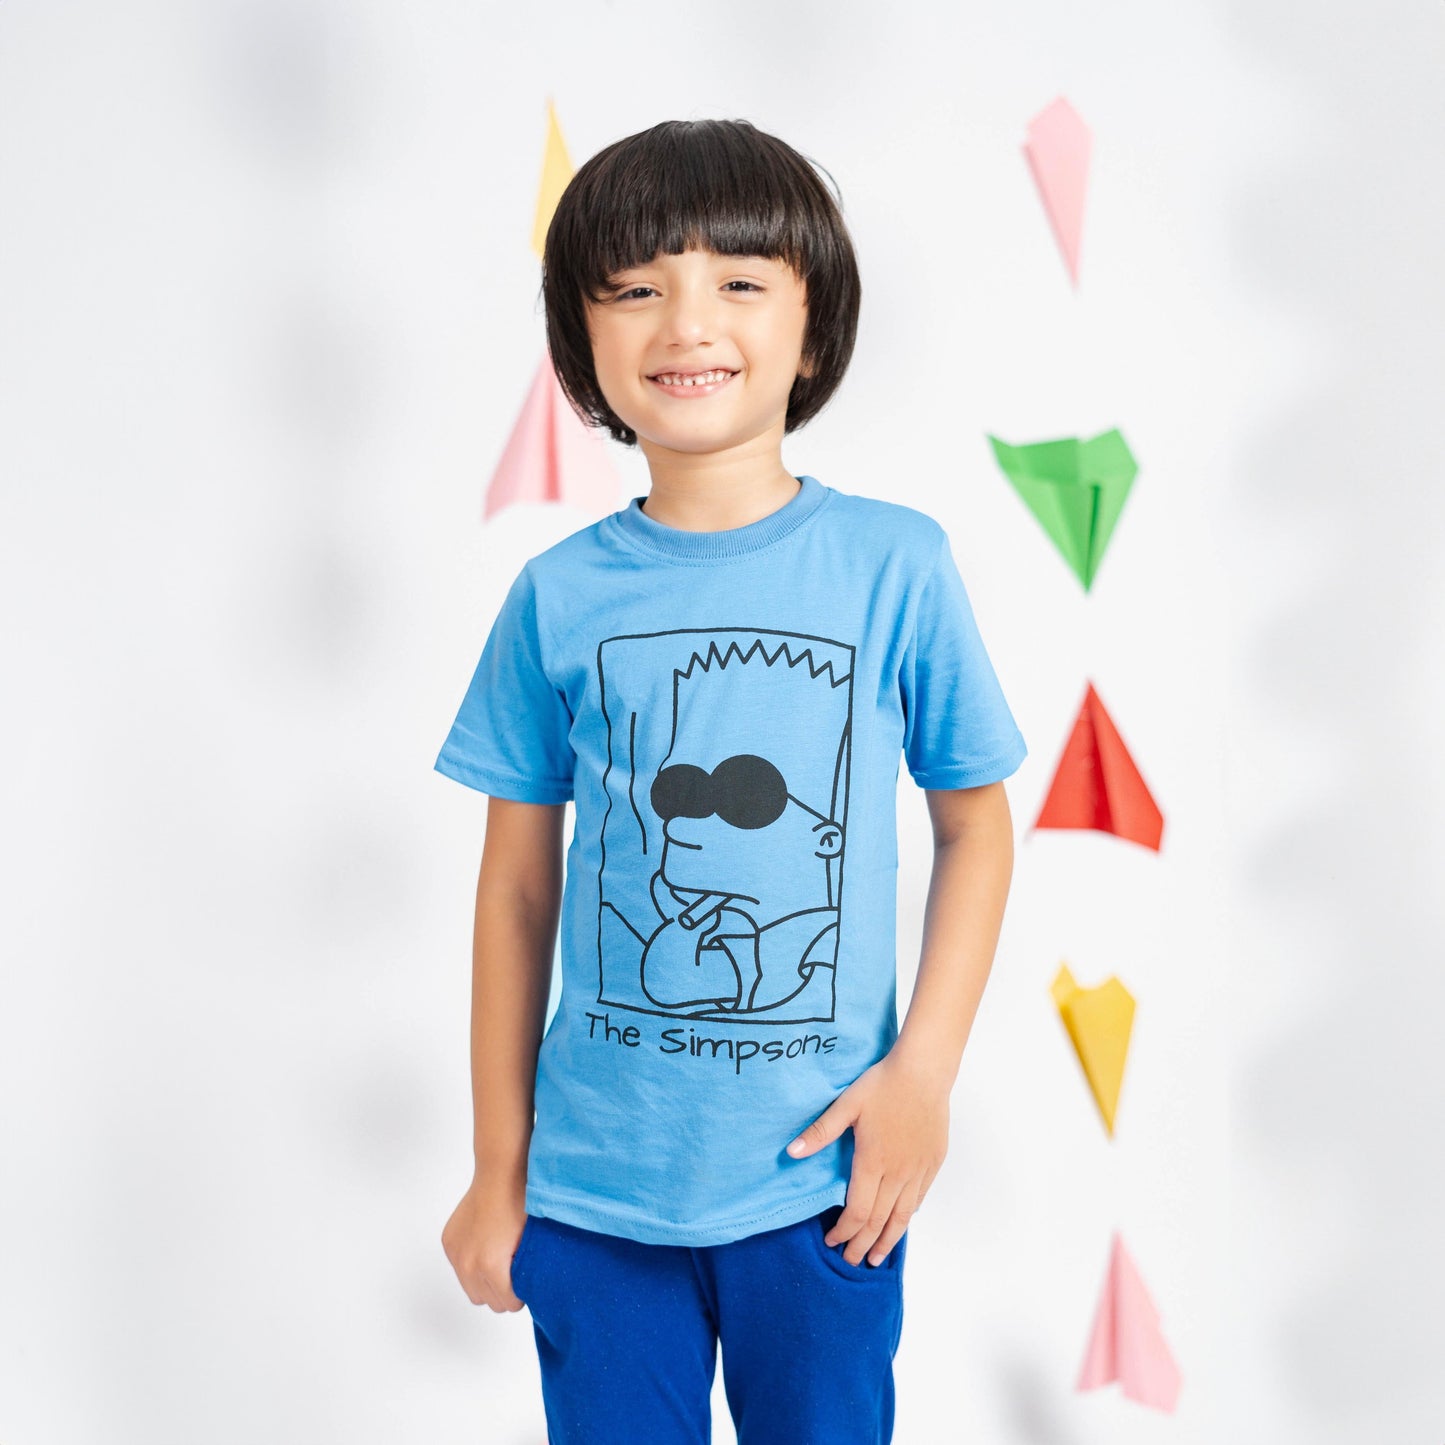 Junior Republic Kid's The Simpsons Printed Tee Shirt Boy's Tee Shirt JRR Blue 1-2 Years 